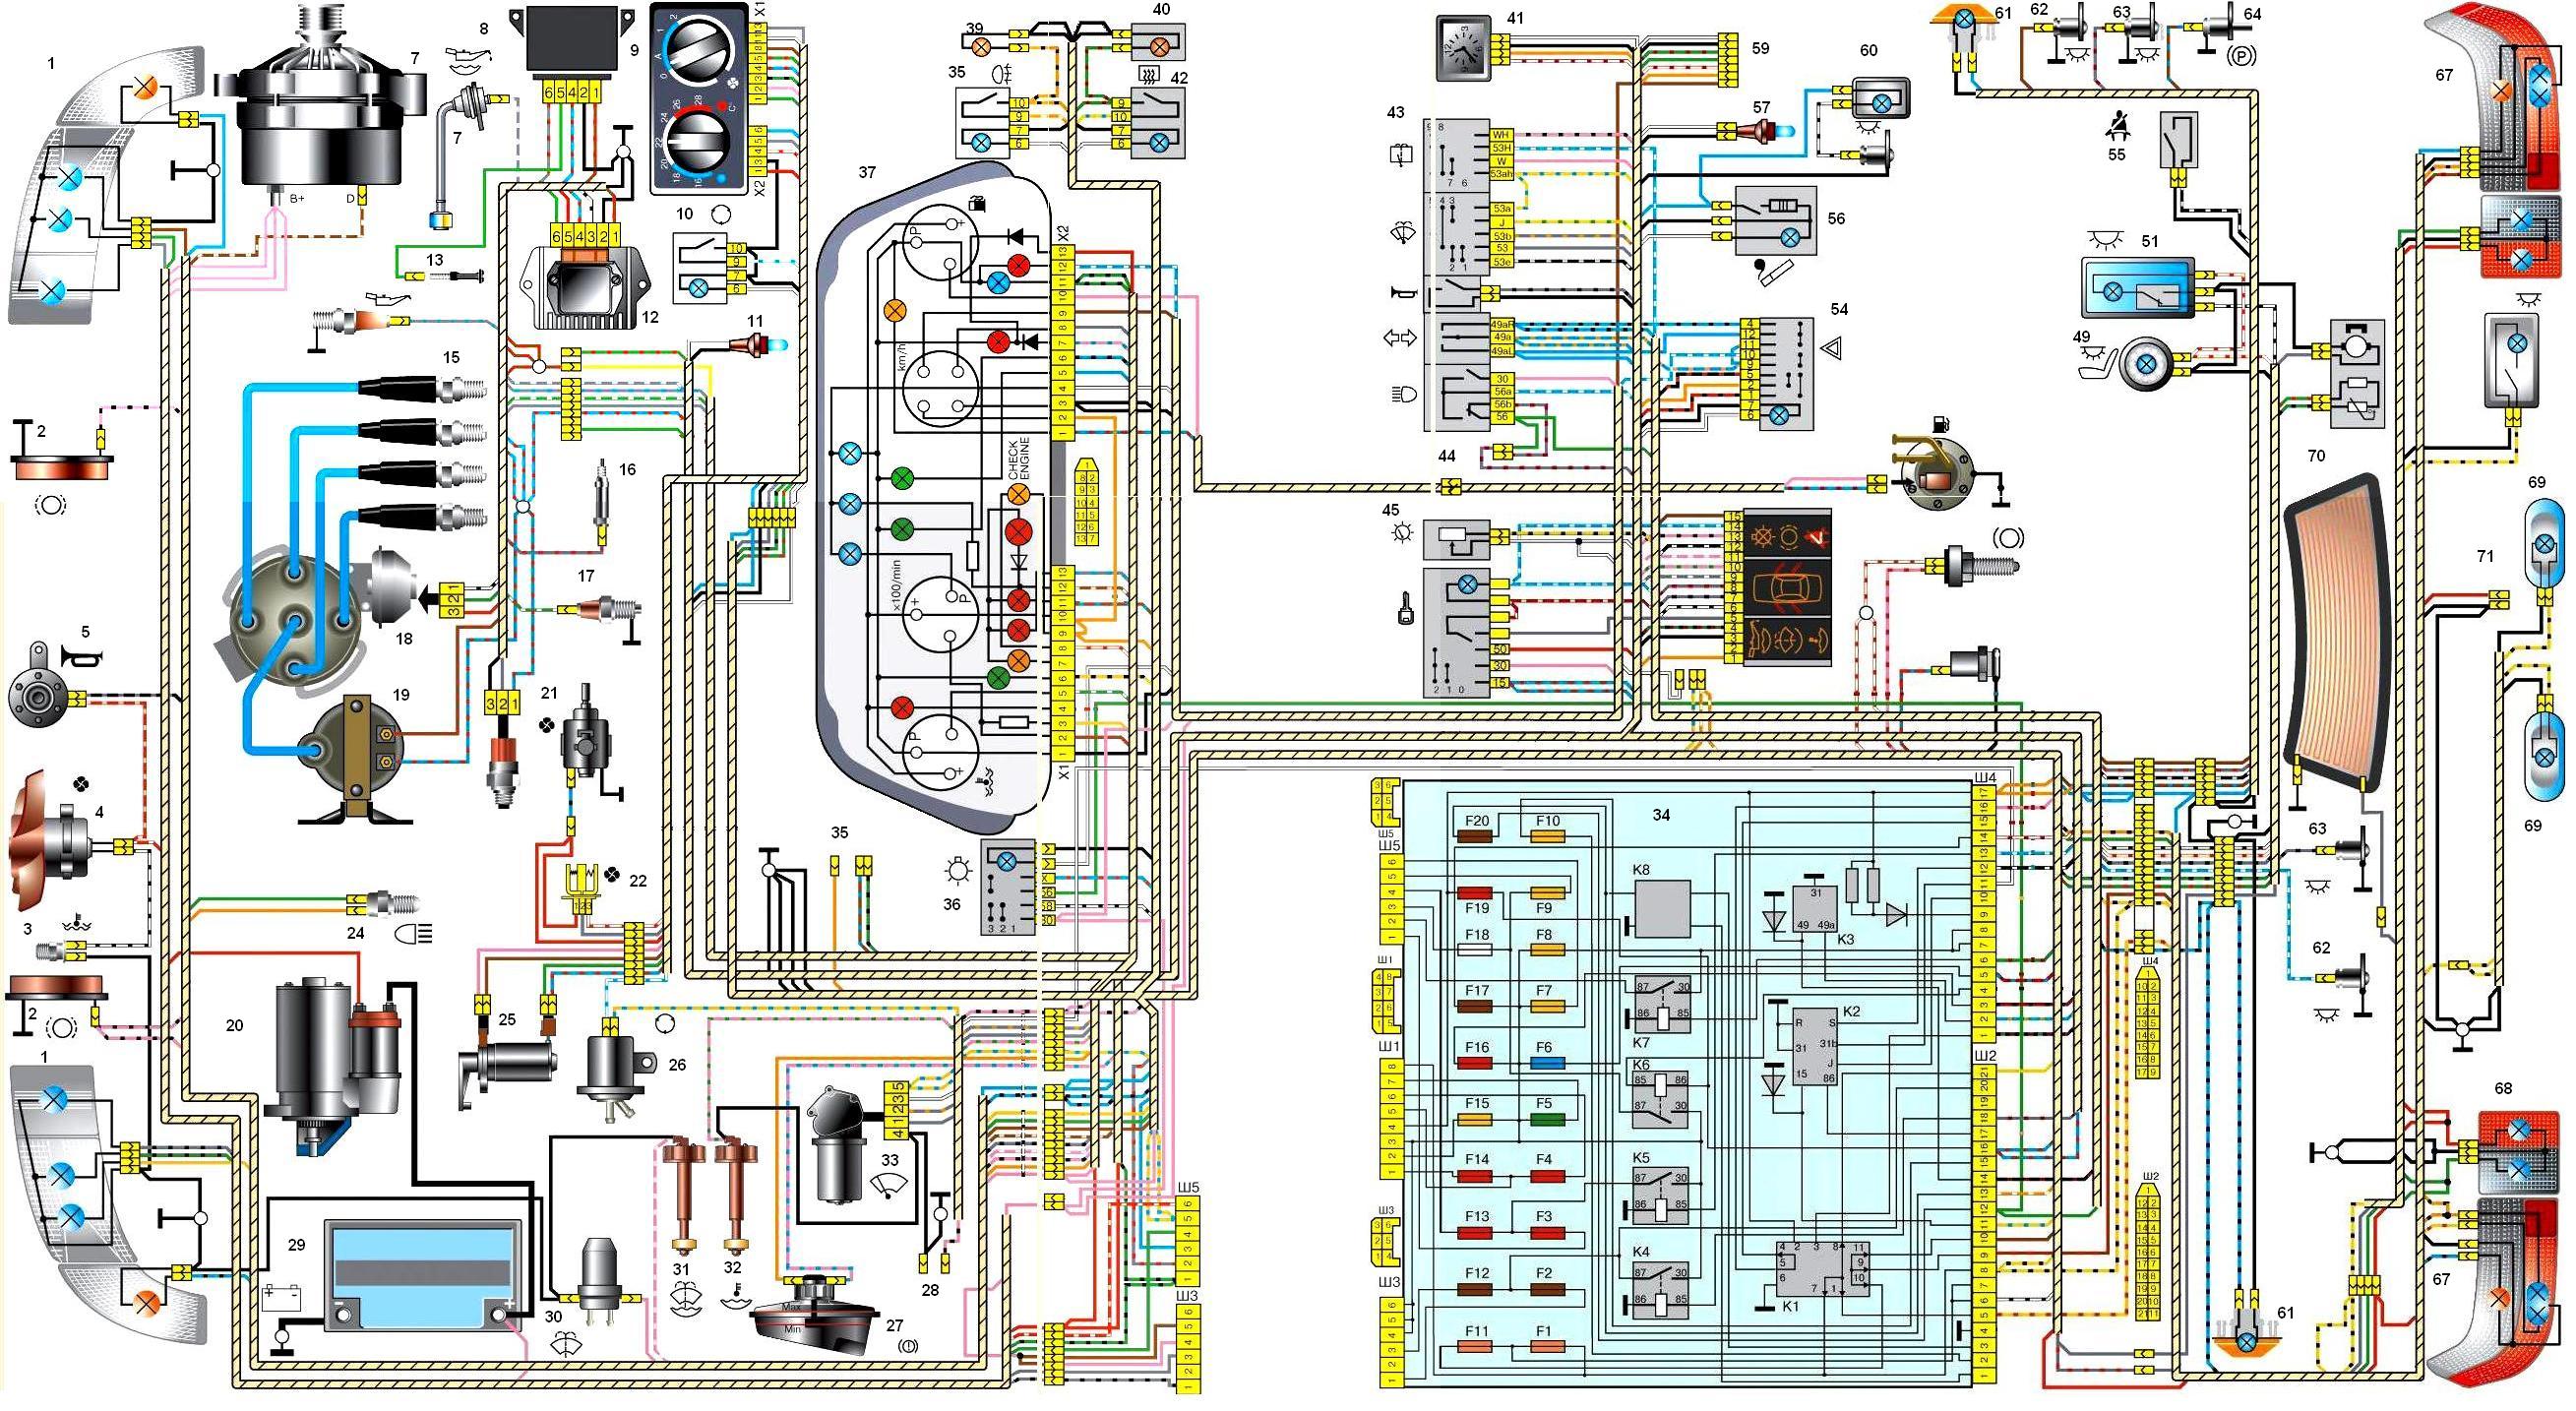 Схема электрооборудования автомобиля ВАЗ-2110